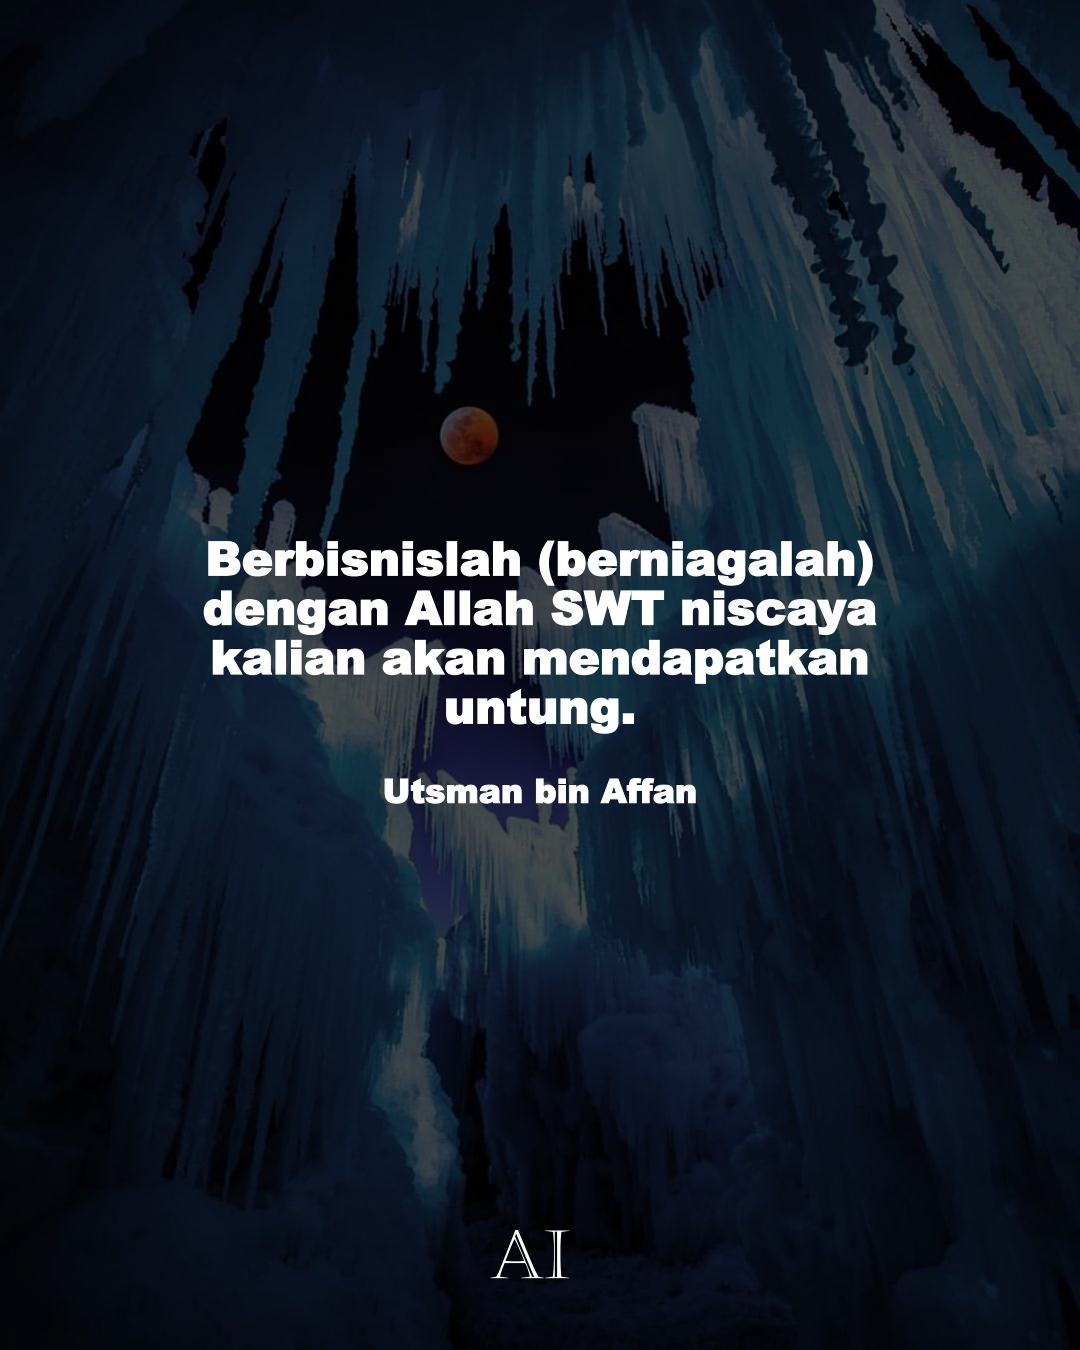 Wallpaper Kata Bijak Utsman bin Affan  (Berbisnislah (berniagalah) dengan Allah SWT niscaya kalian akan mendapatkan untung.)